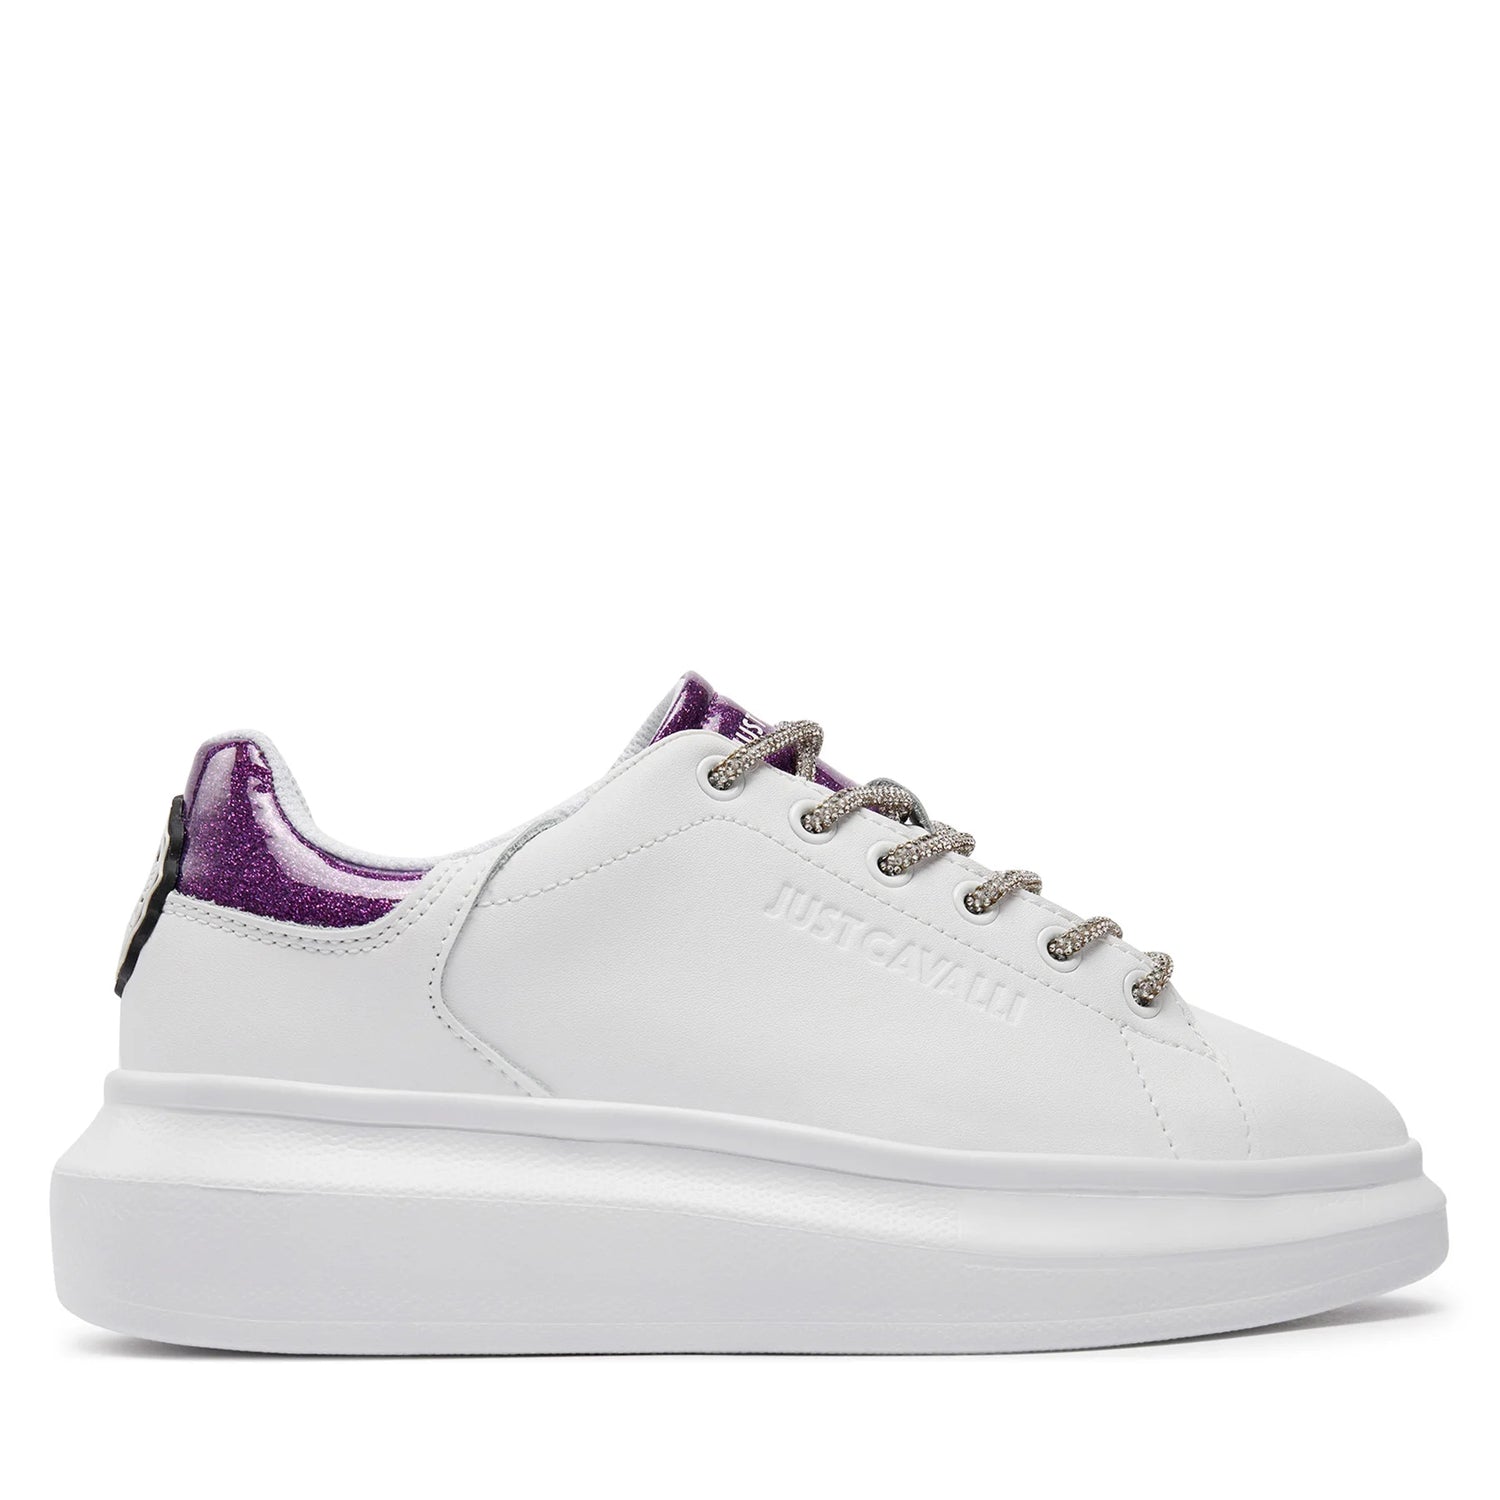 Just Cavalli Sapatilhas Sneakers Shoes 76ra3sb1 White Lila Branco Lilac_shot6